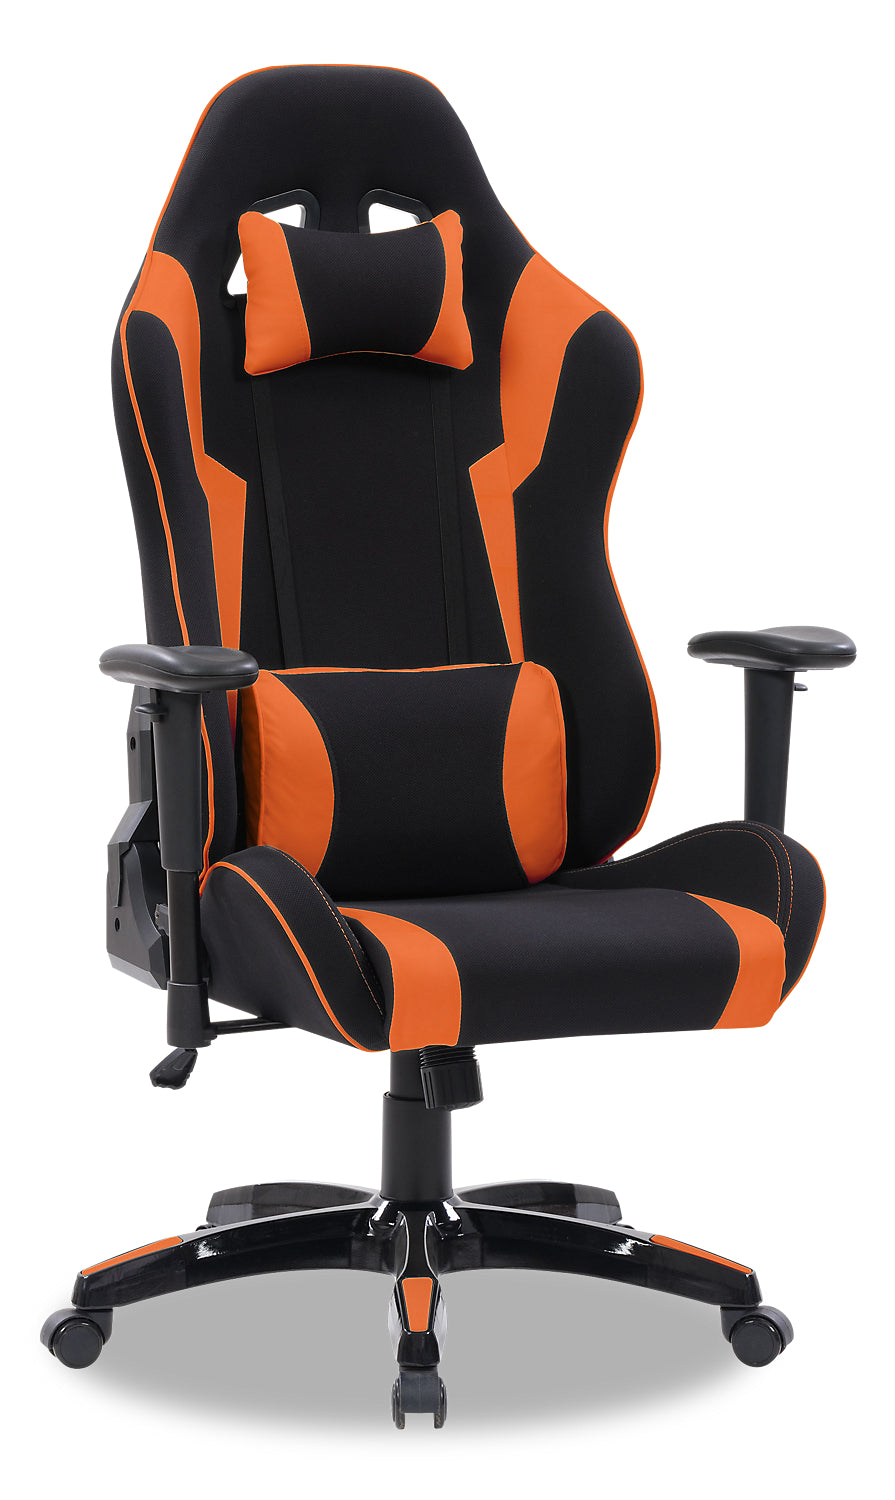 Gamer Chair Black And Orange The Brick